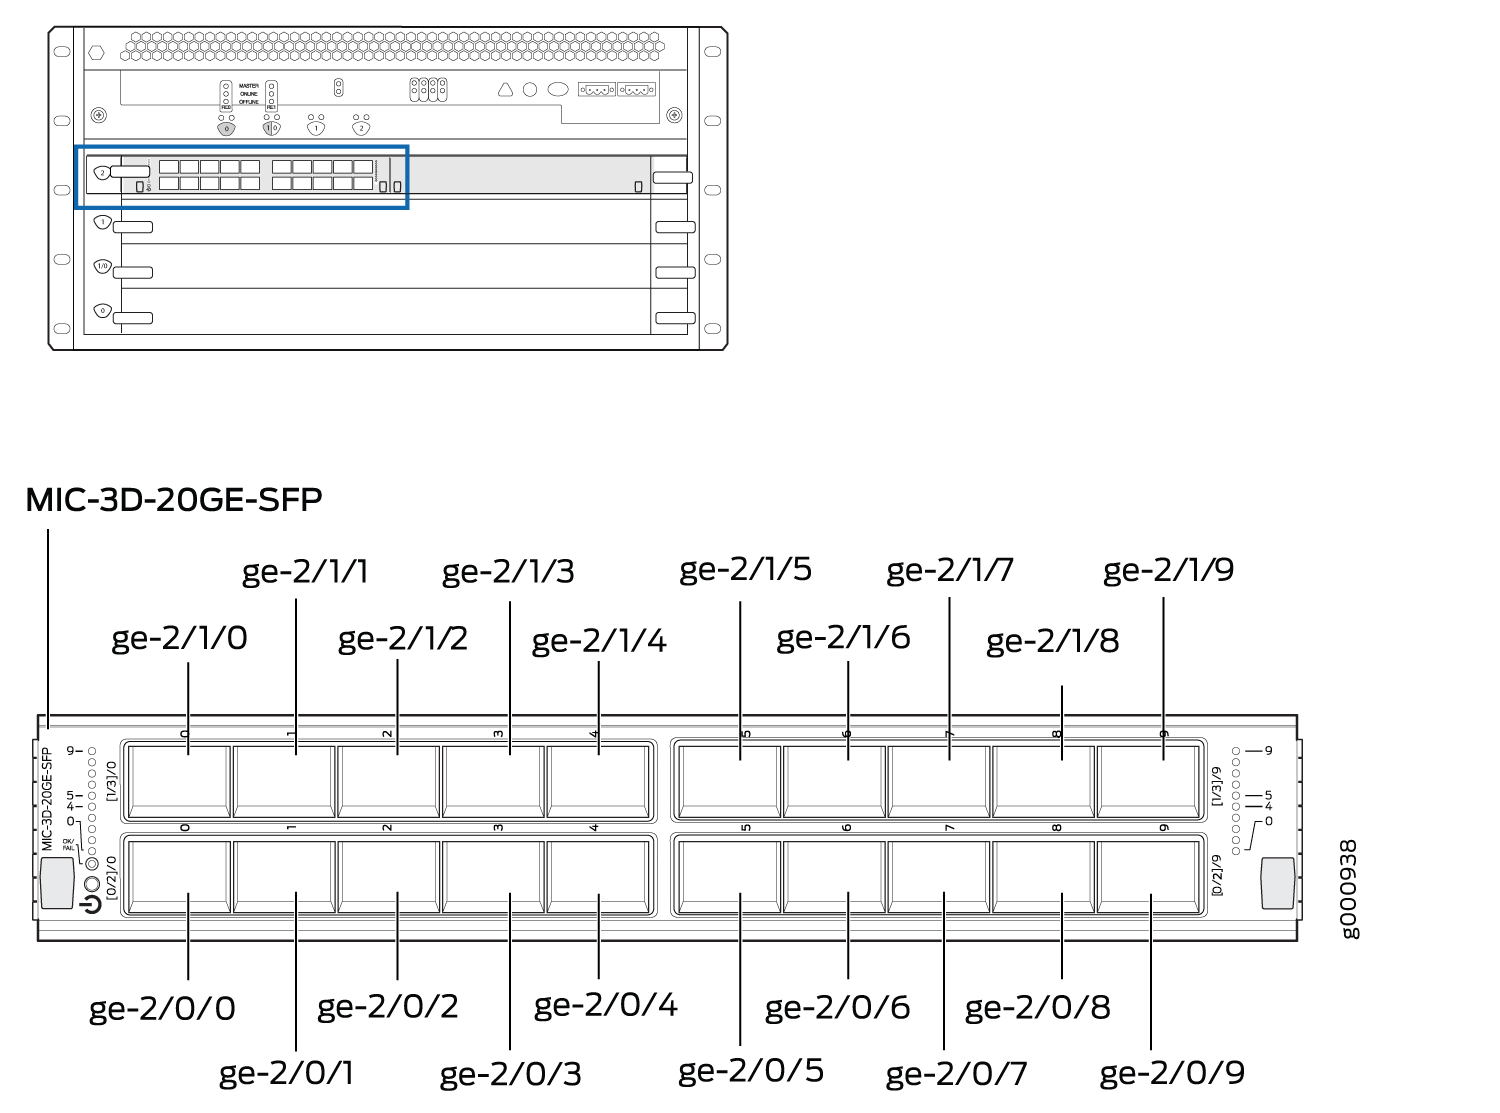 Port Numbering for Gigabit Ethernet MIC with SFP (MX240)